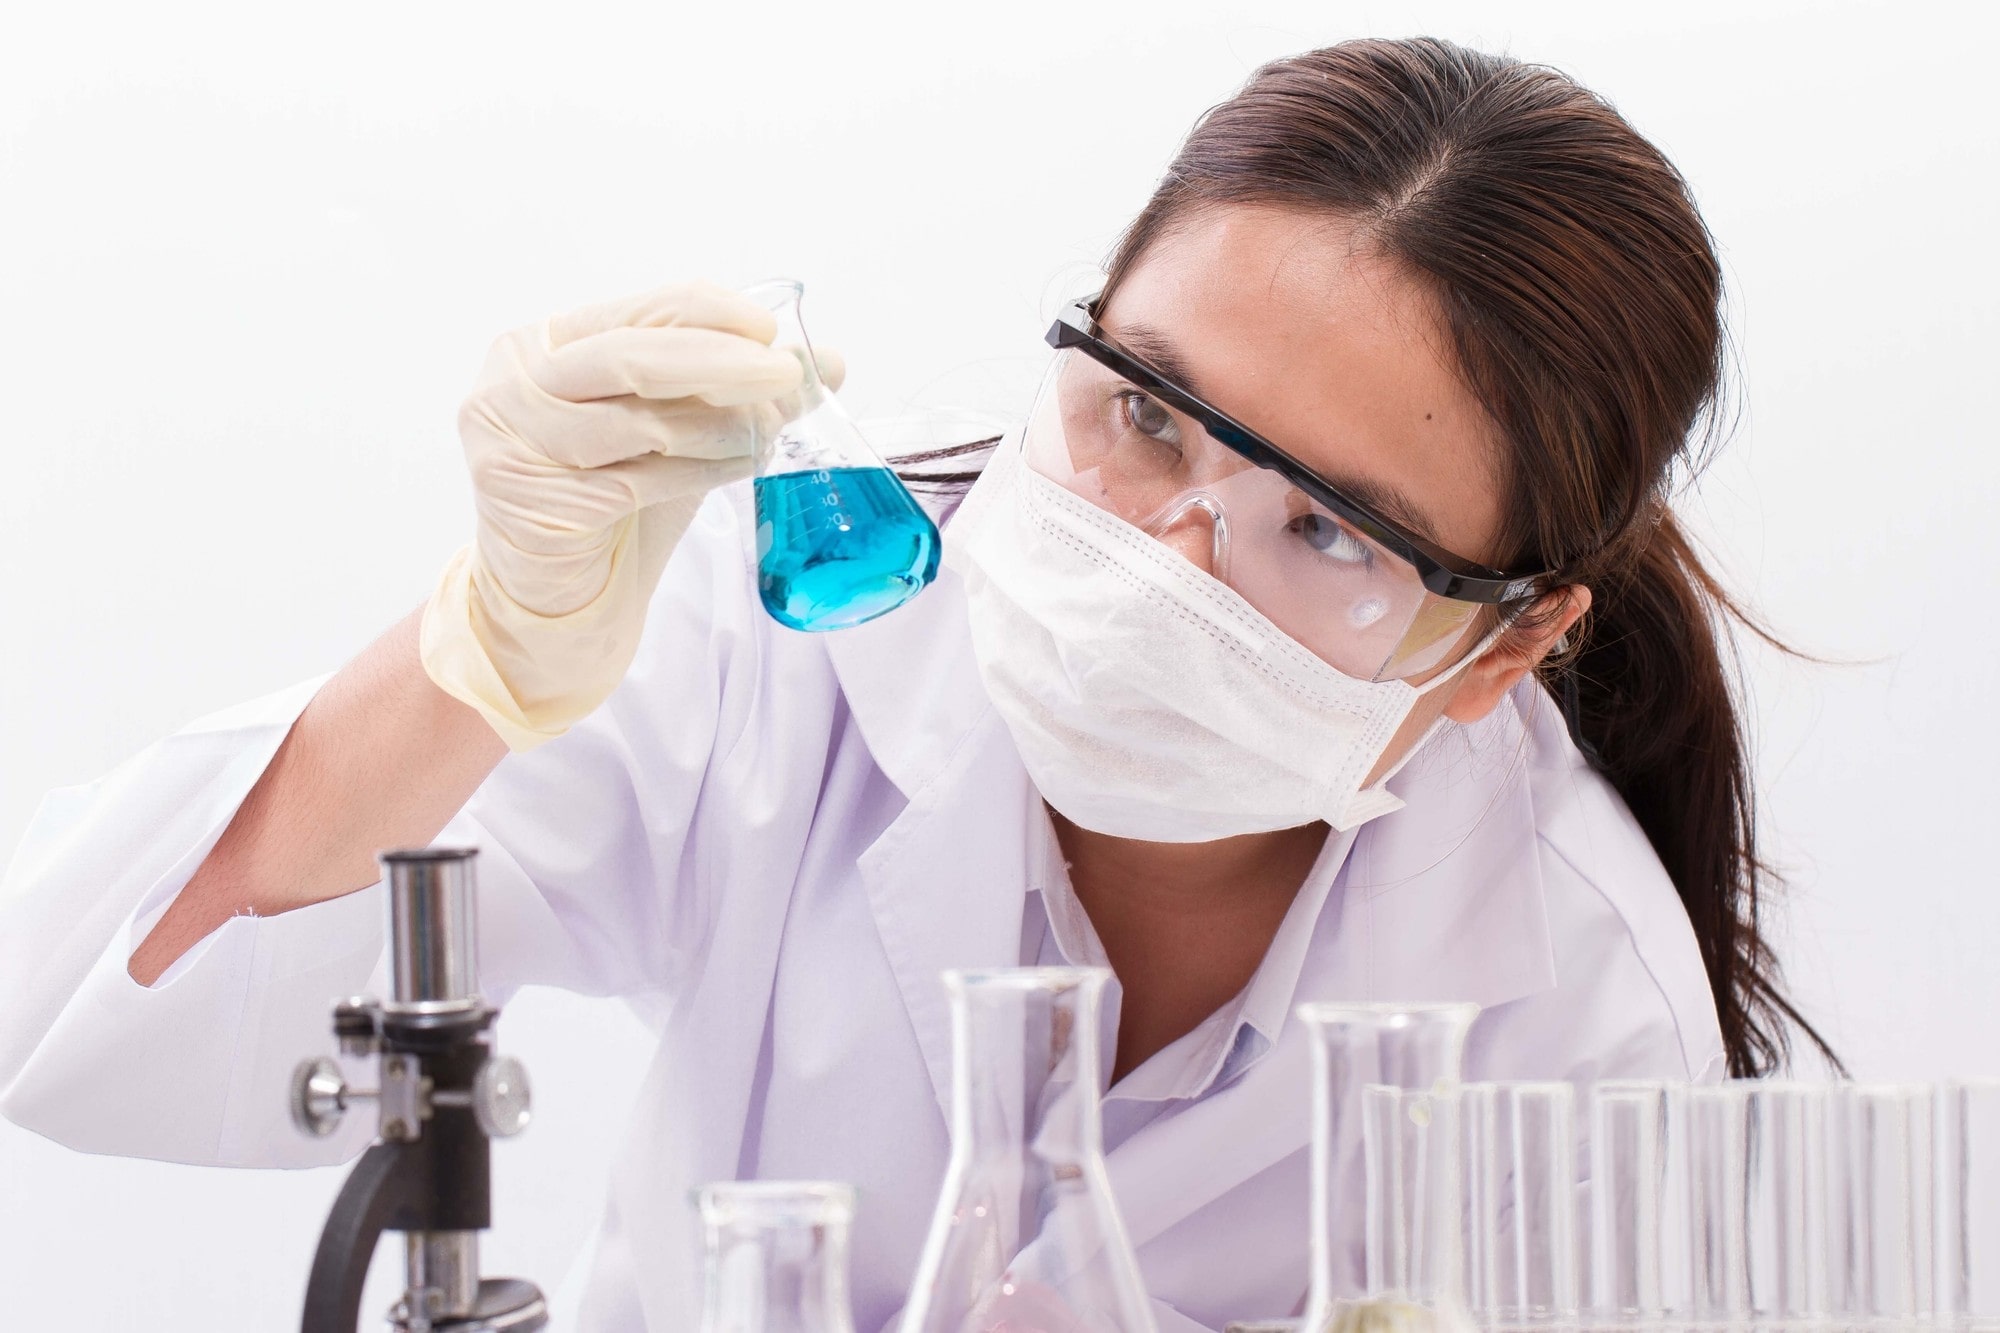 Lab Technician Holding a Beaker With Blue Liquid